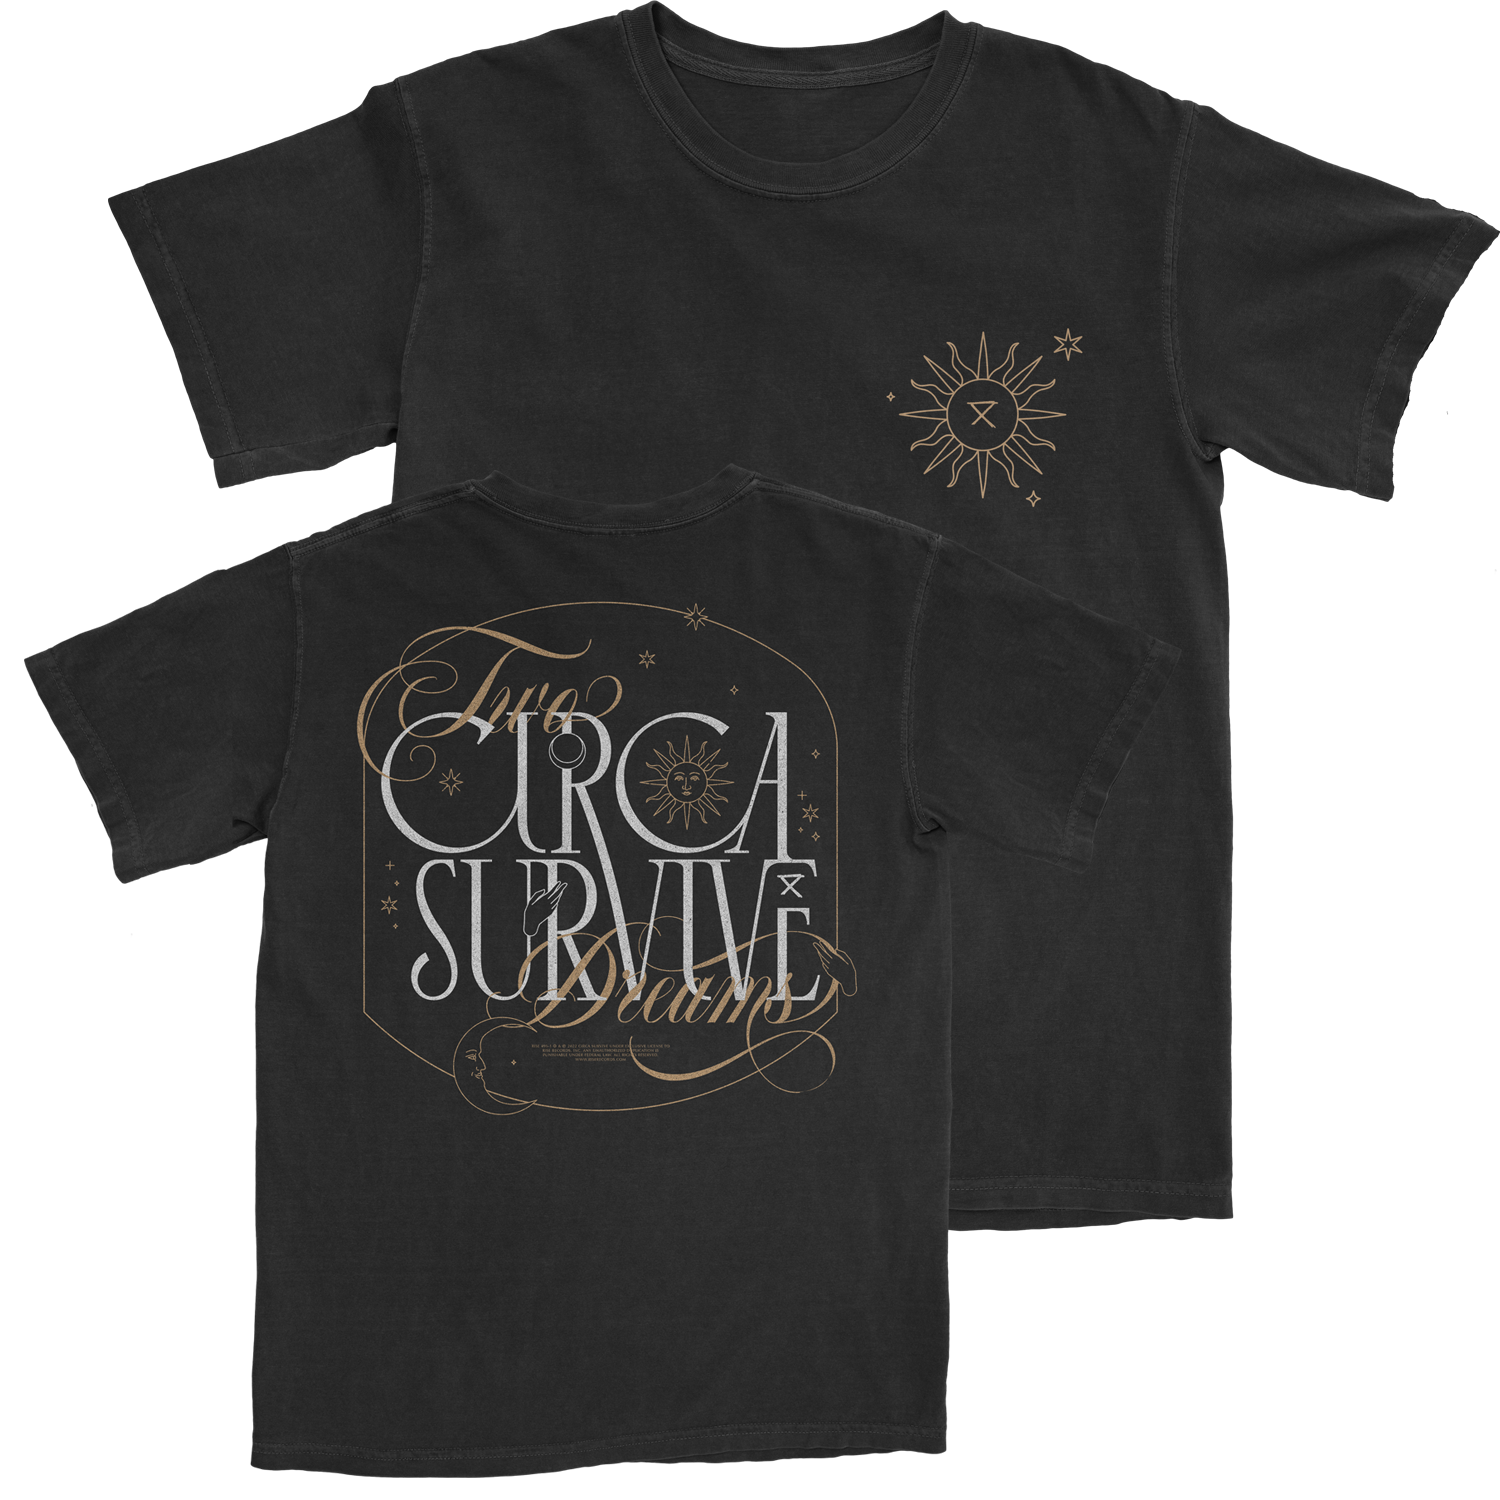 – Circa Two Survive Shirt Dreams